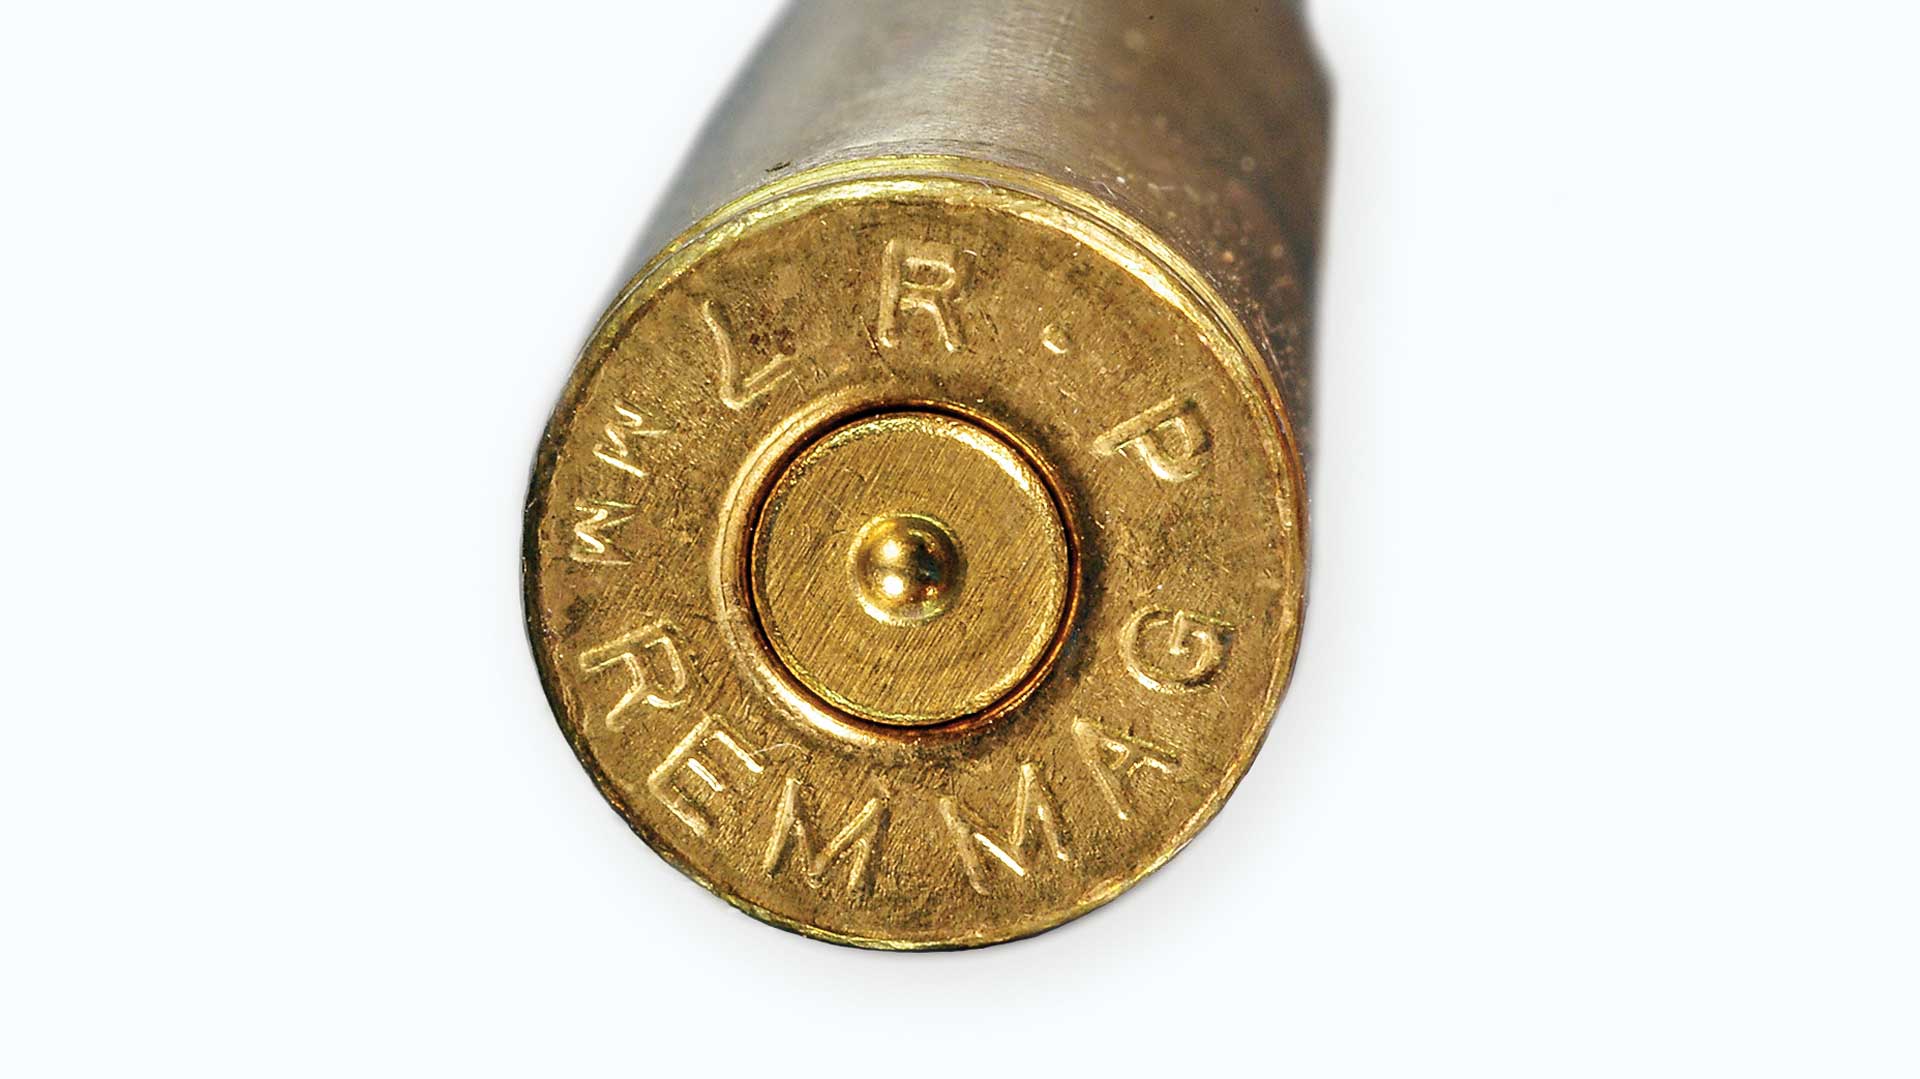 remington gun club target loads